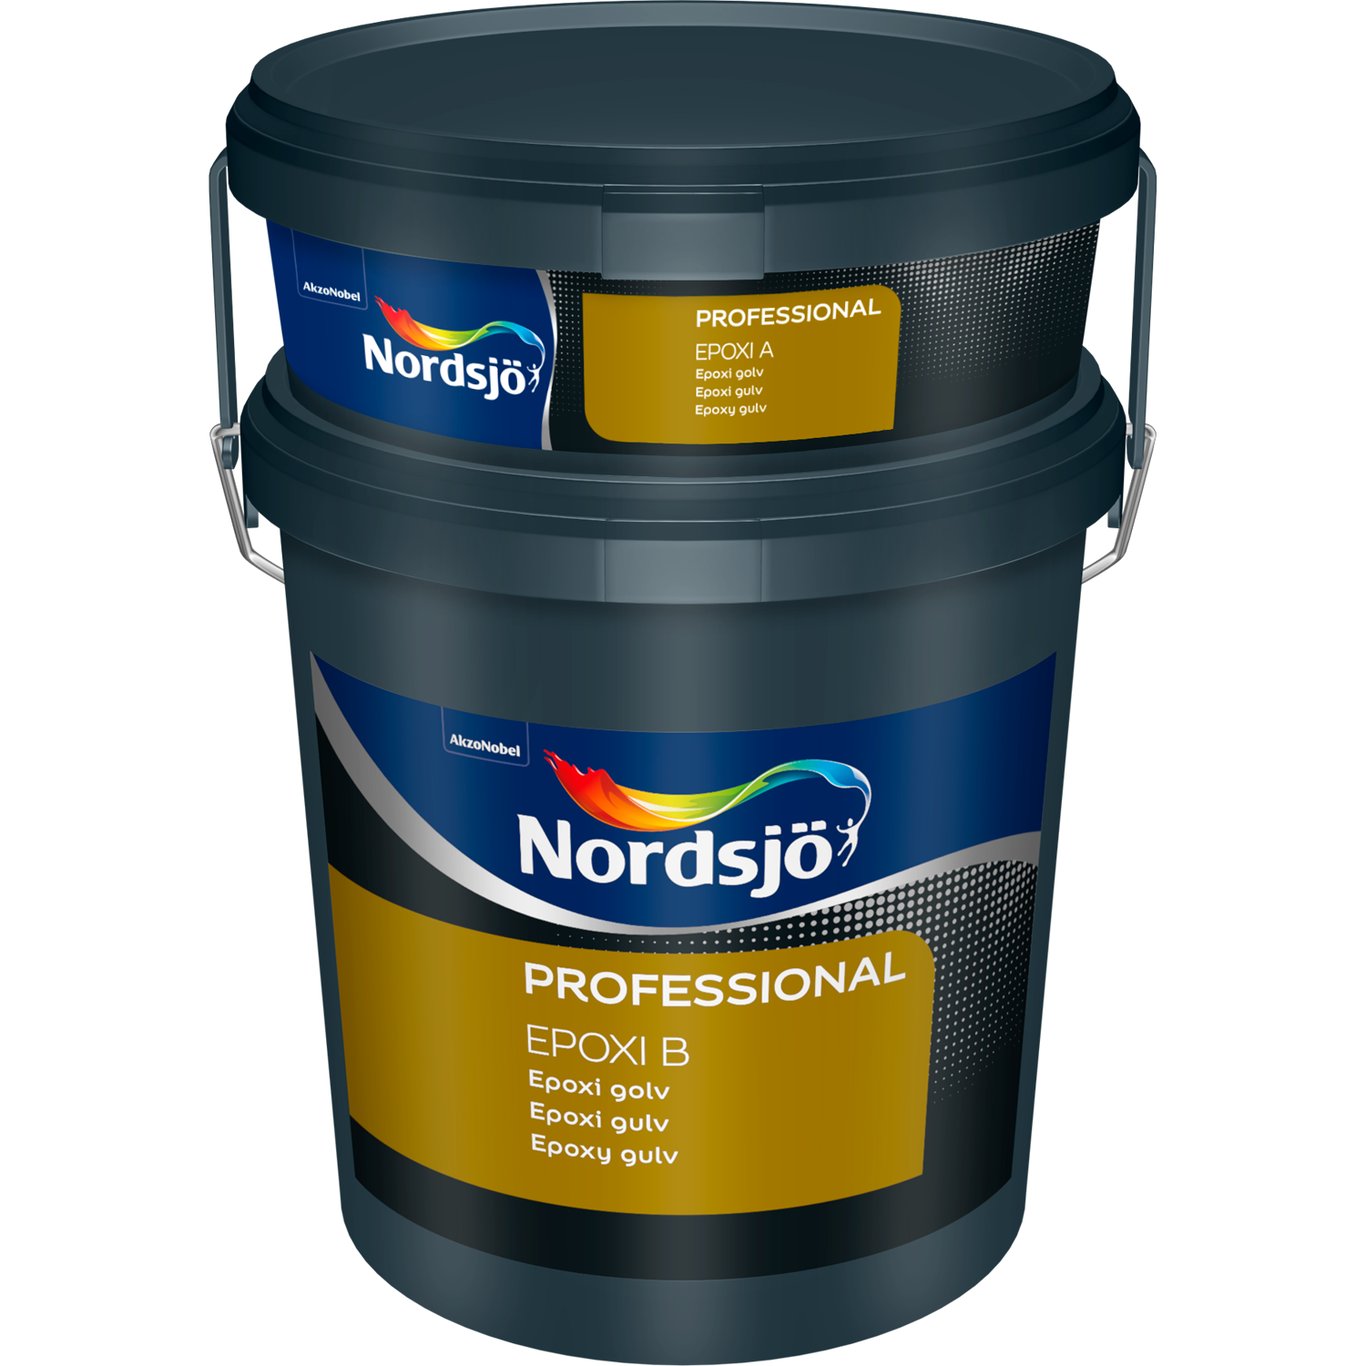 NORDSJØ PROFESSIONAL EPOXY GULV LYS GRÅ 0,8L INKL. HERDER